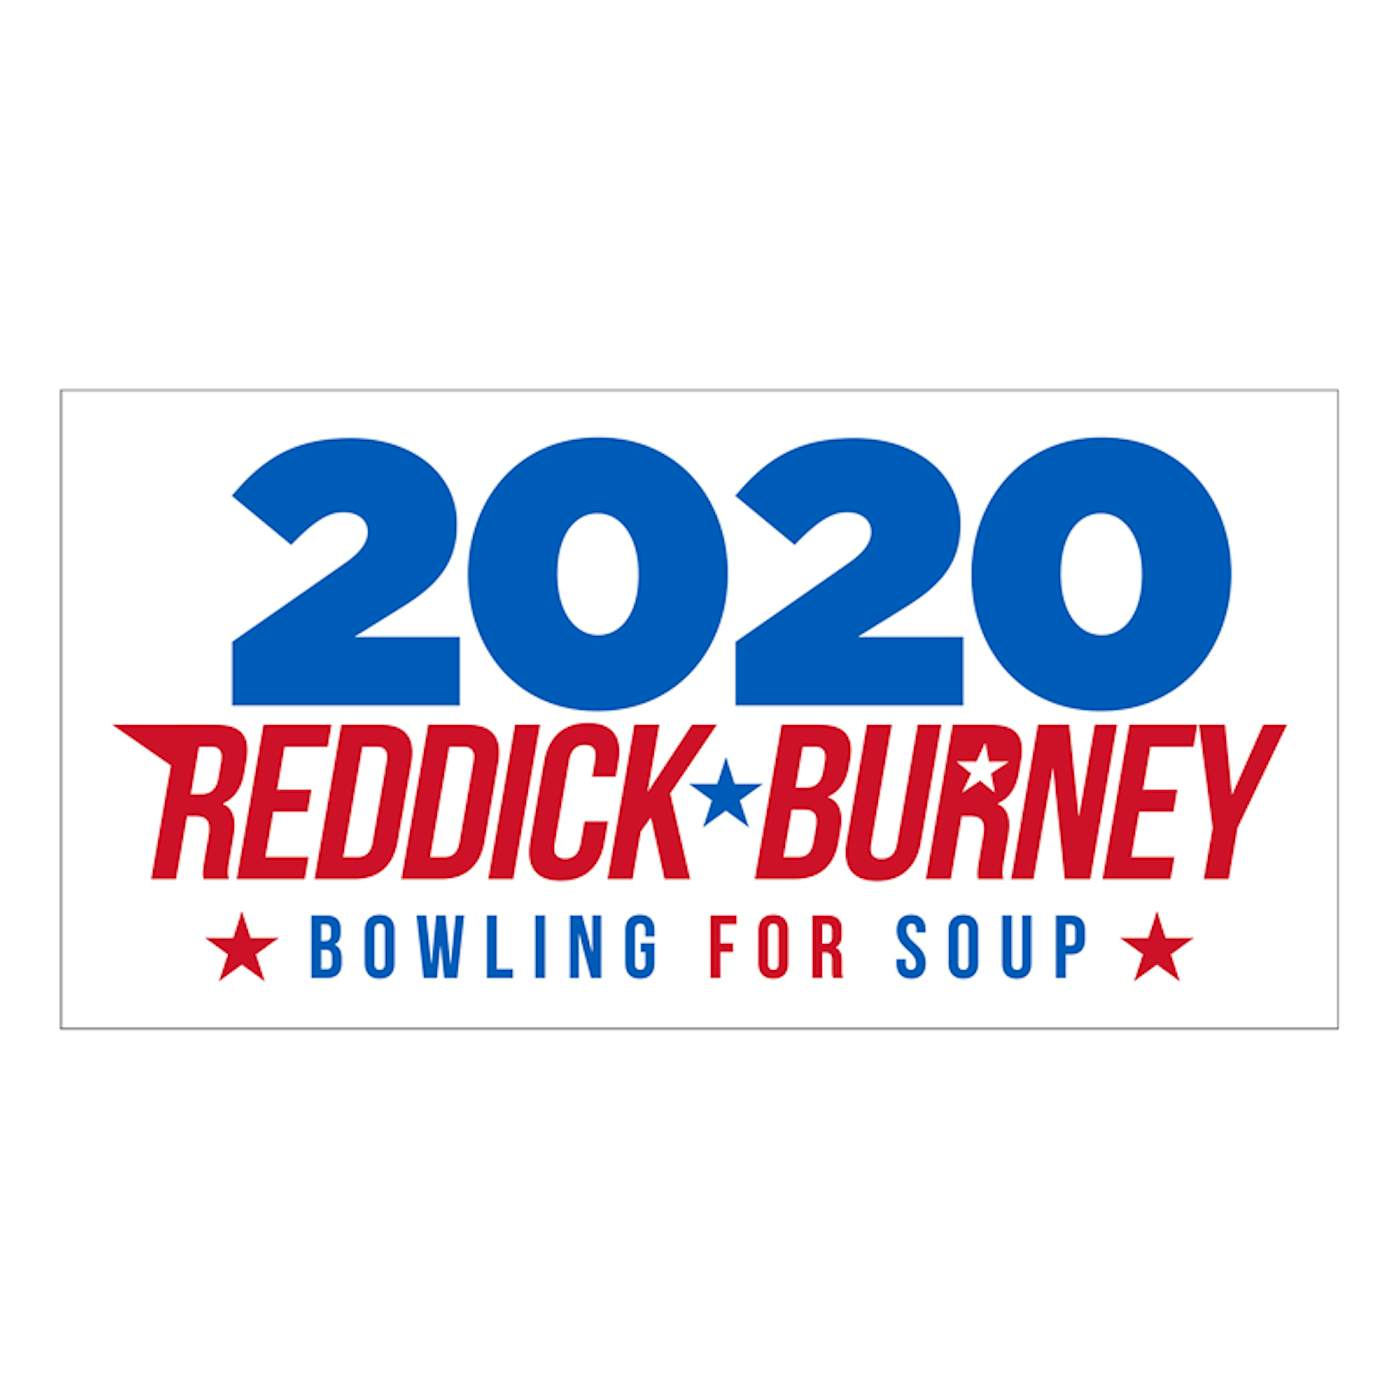 Bowling For Soup - Reddick & Burney 2020 Bumper Sticker